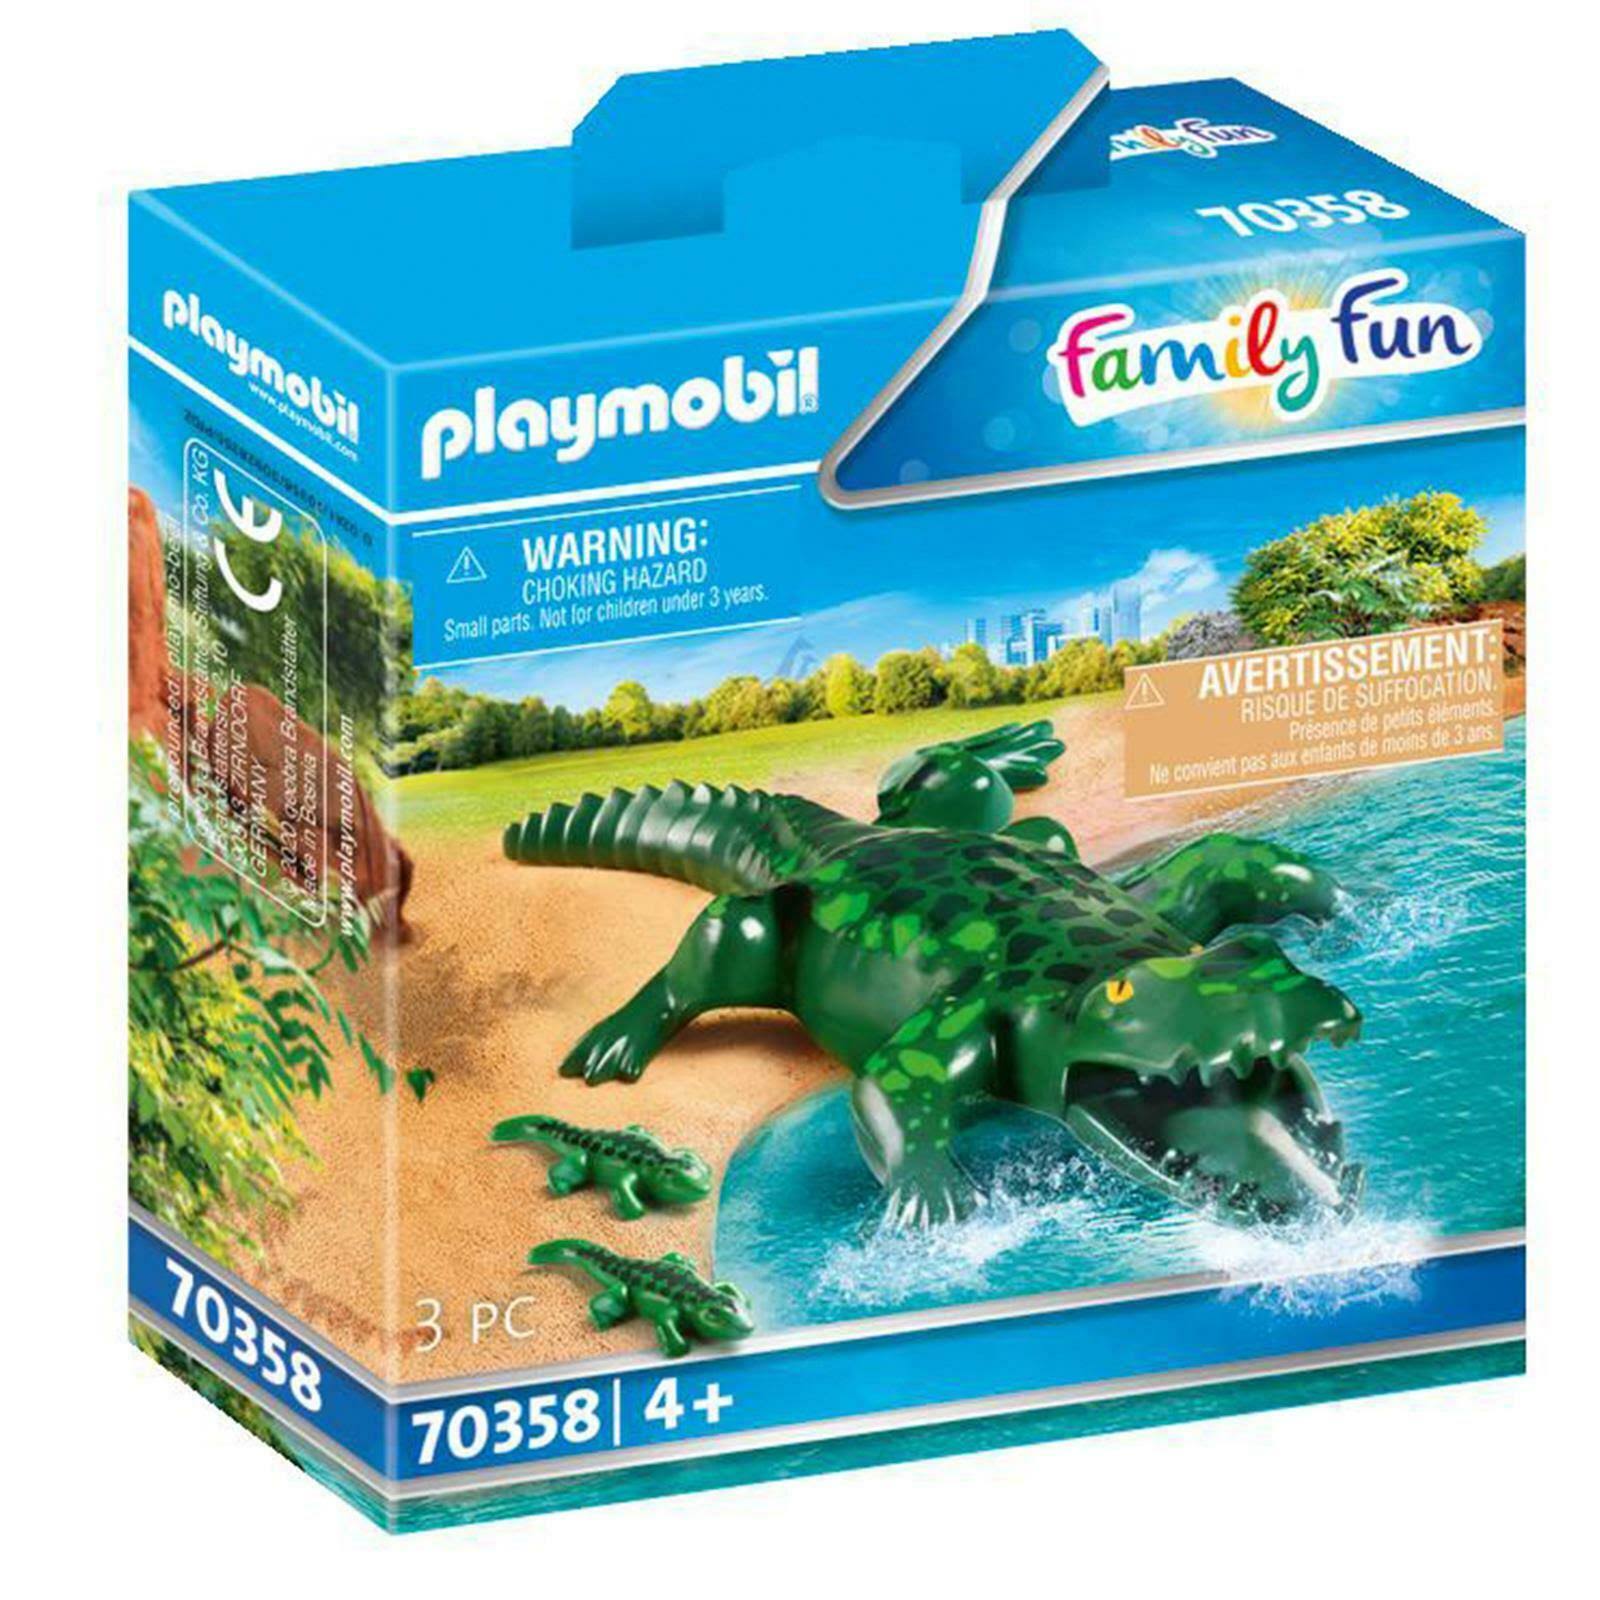 Playmobil 70358 Family Fun Alligator with Babies